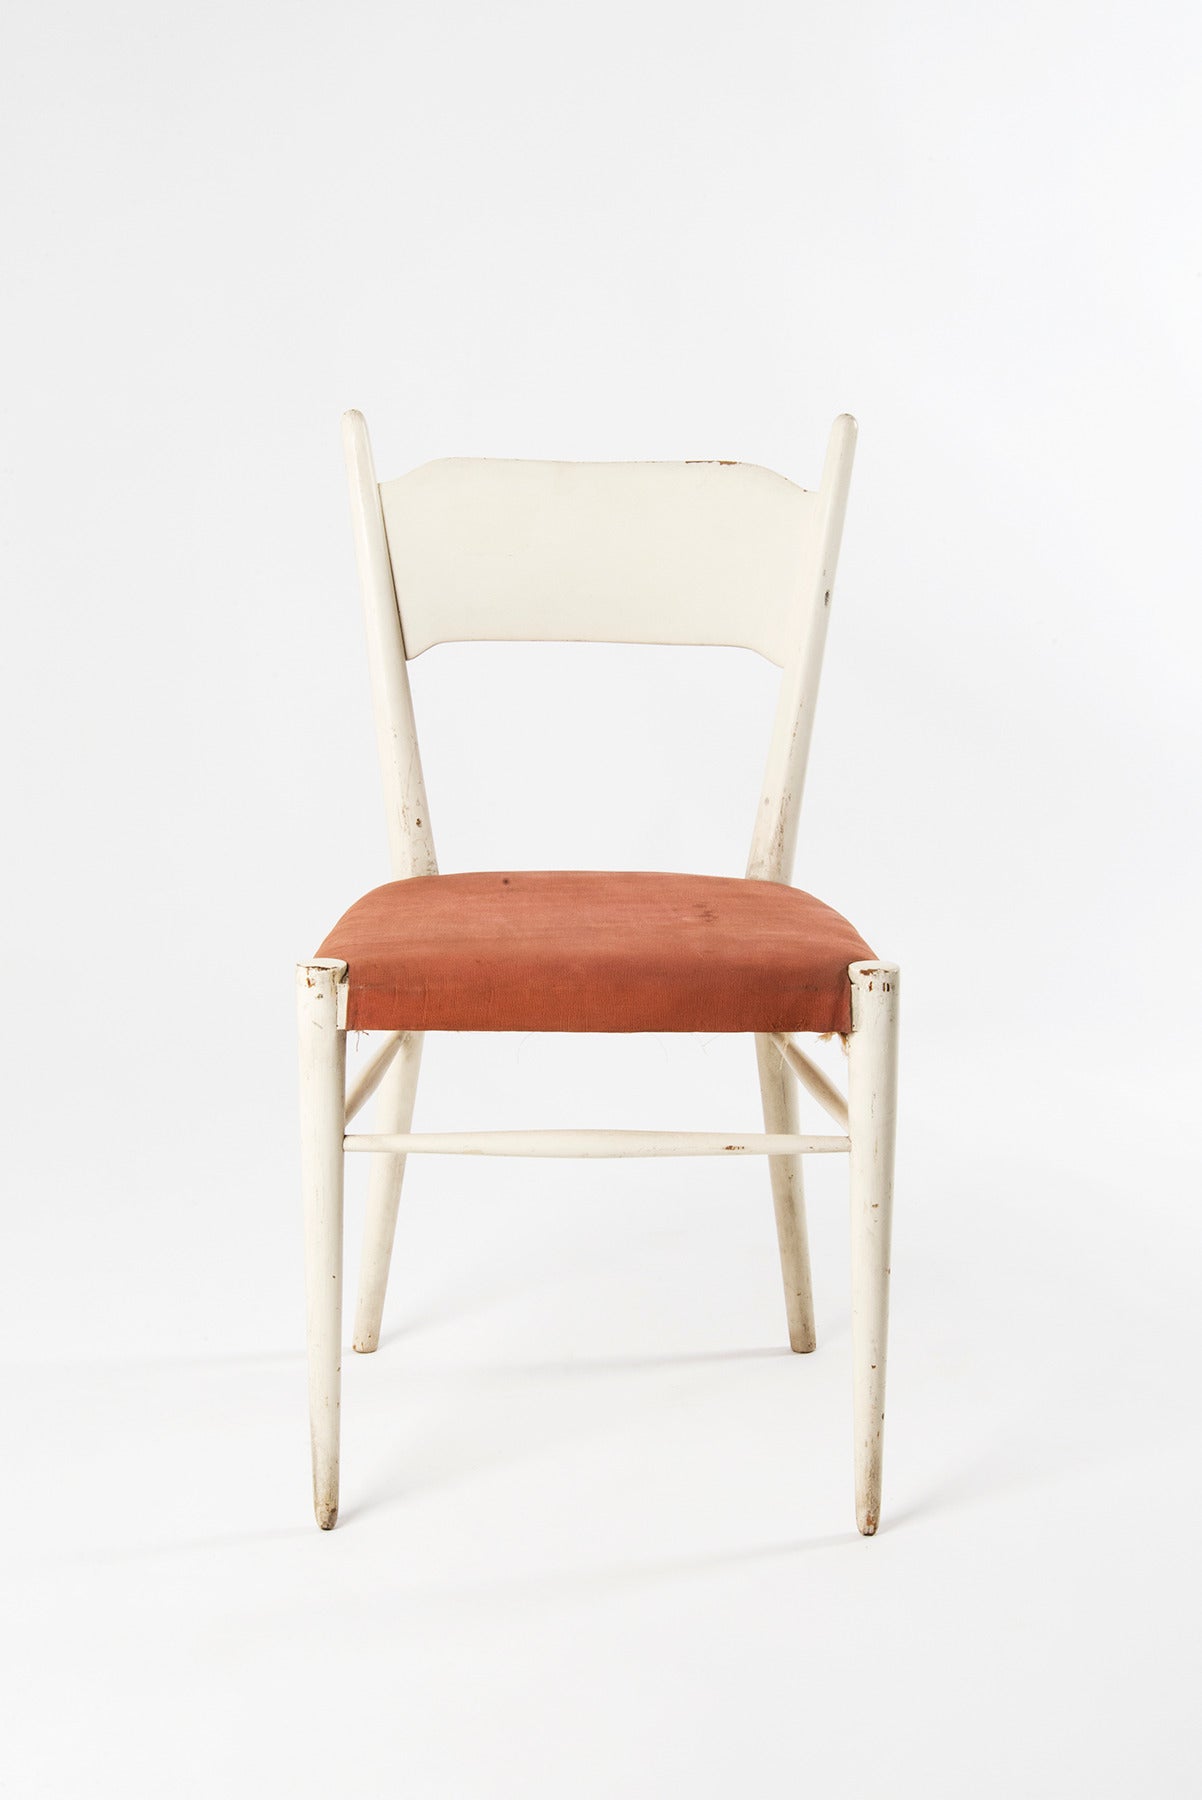 Lacquered Pair of Chairs by Osvaldo Borsani for Arredamenti Borsani Varedo, 1950